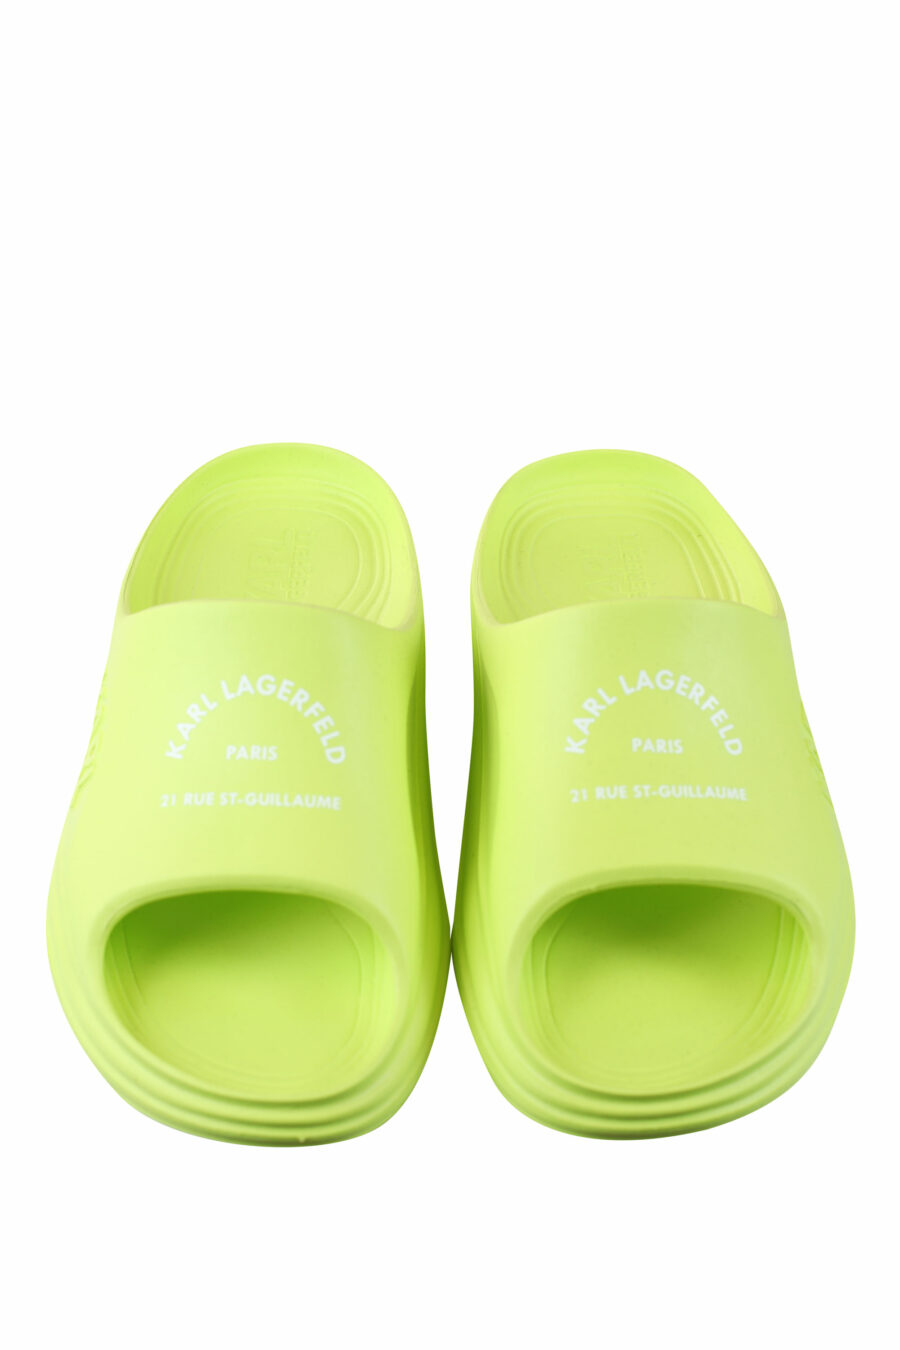 Green eco flip flops with monochrome logo - IMG 9995